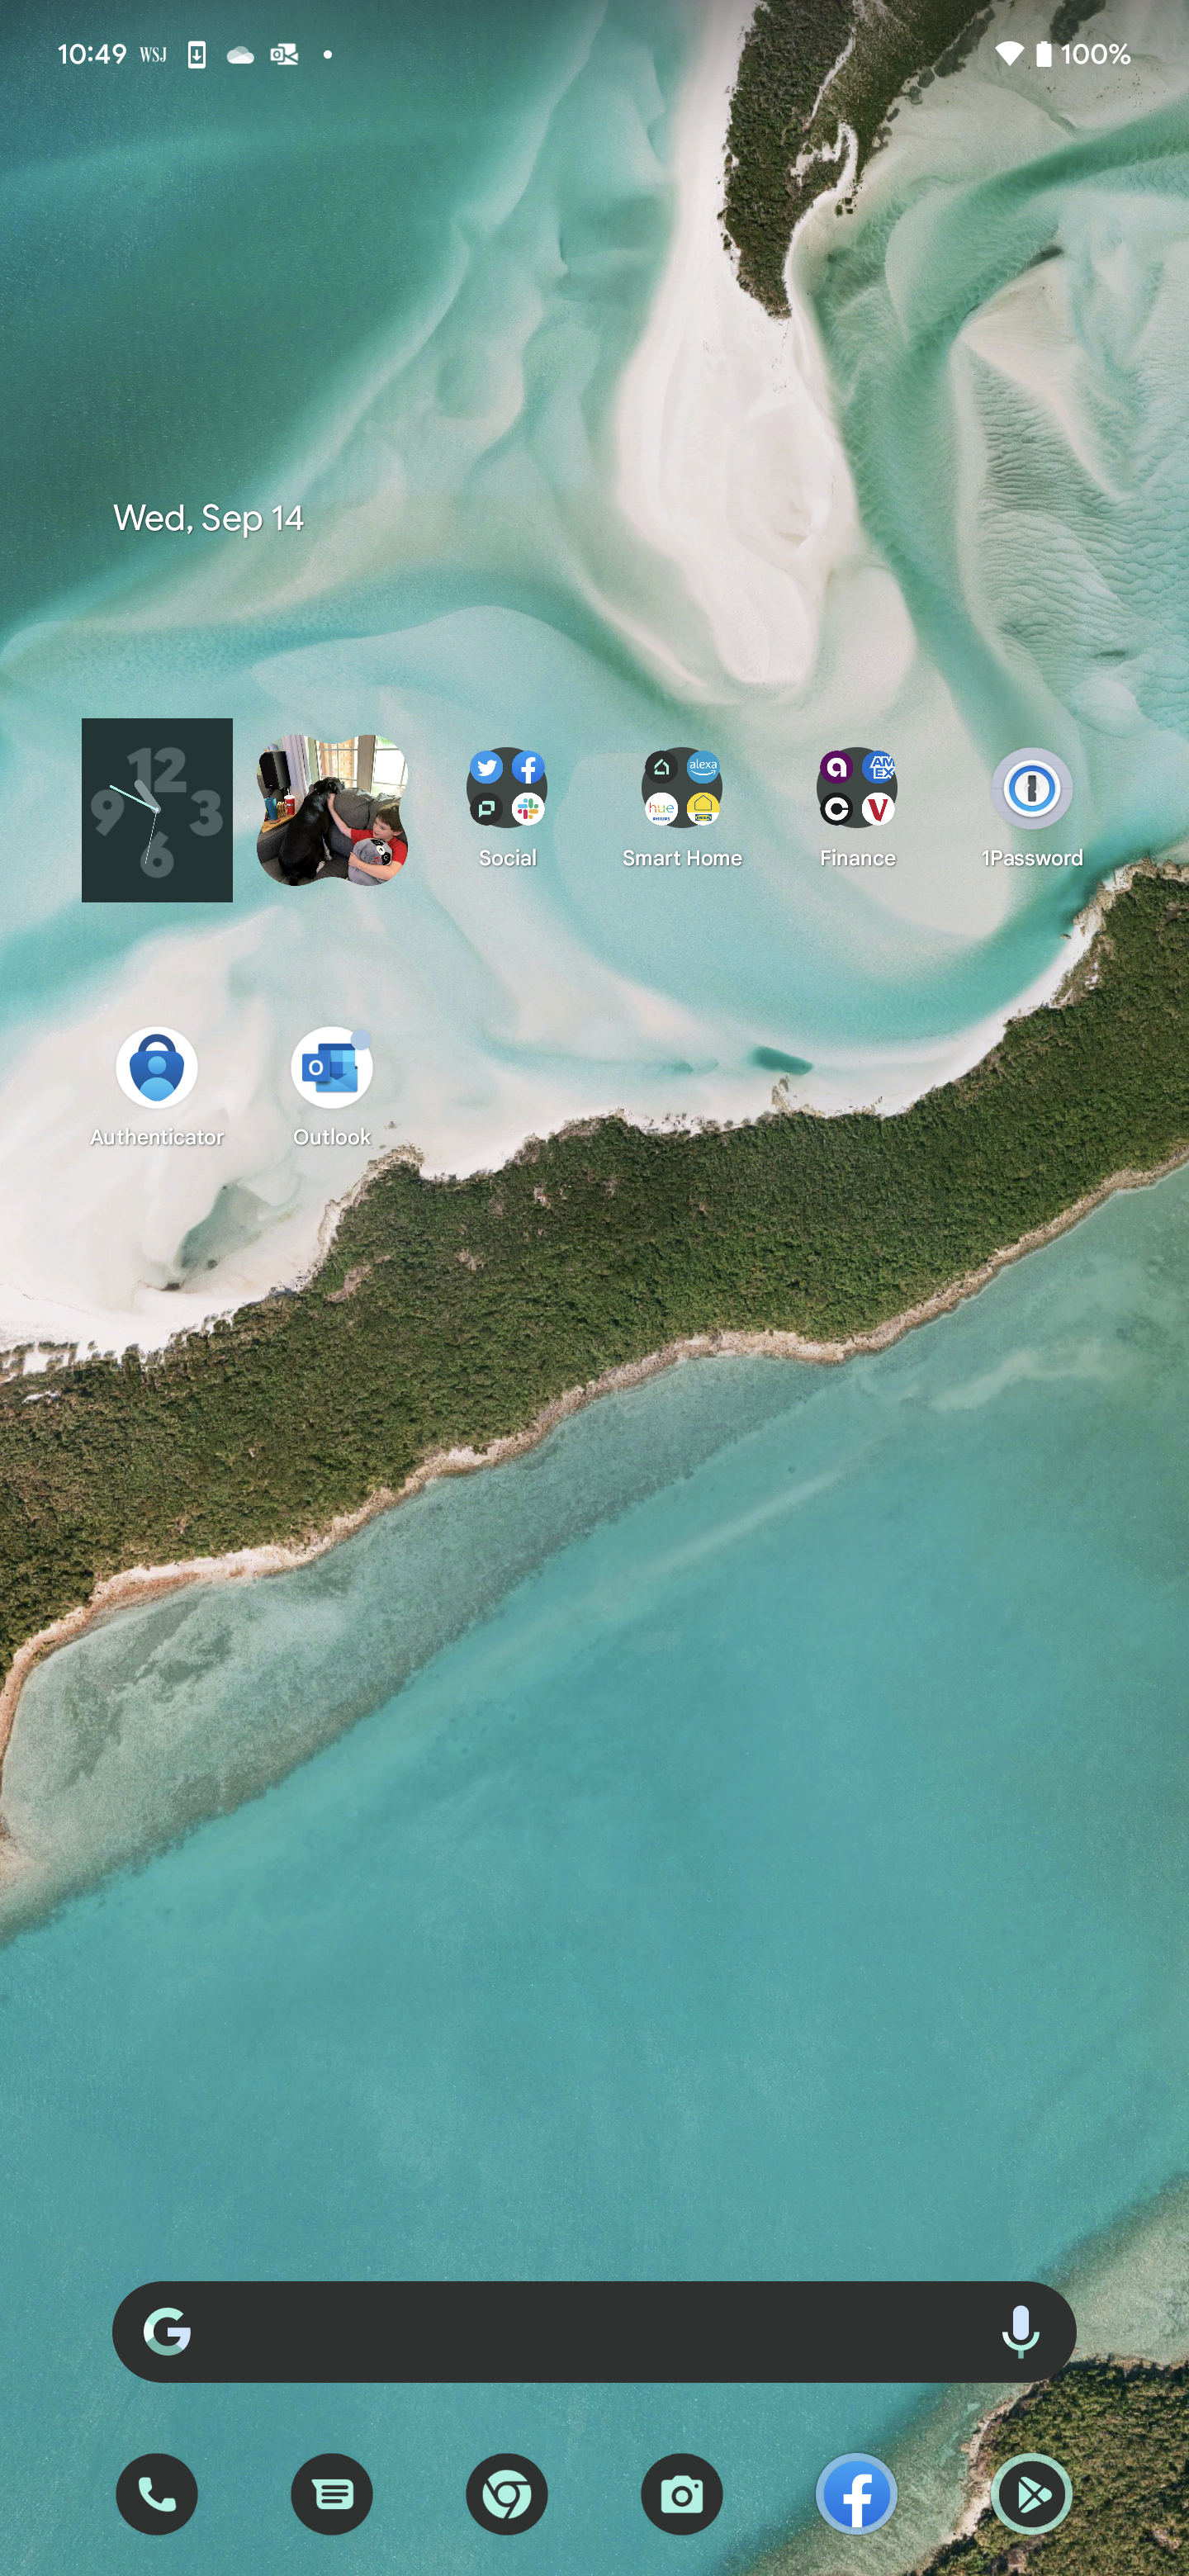 Android 13 taskbar on Pixel home screen.